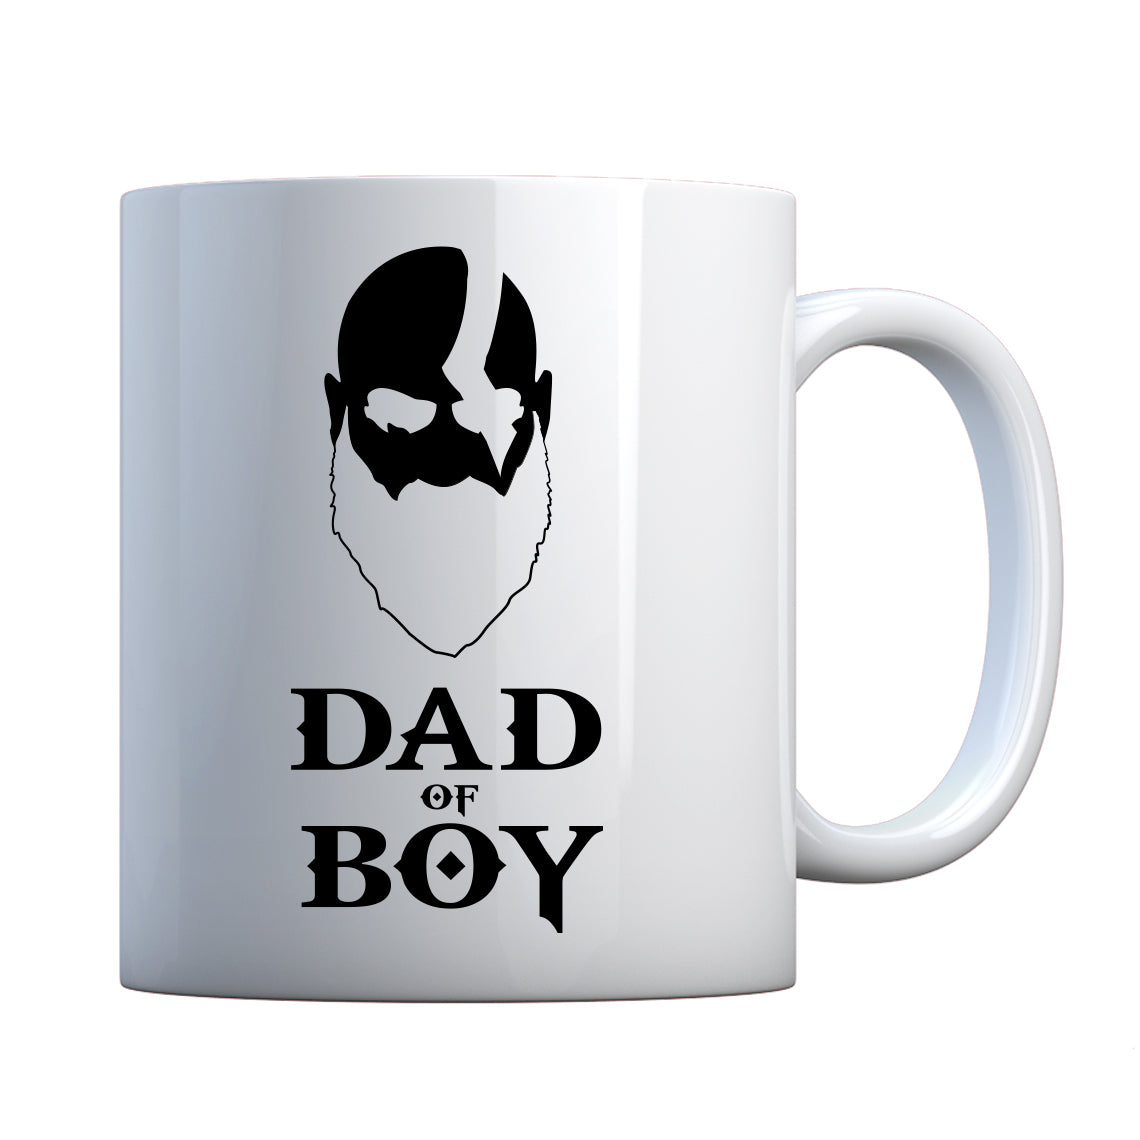 Mug Dad of Boy Ceramic Gift Mug